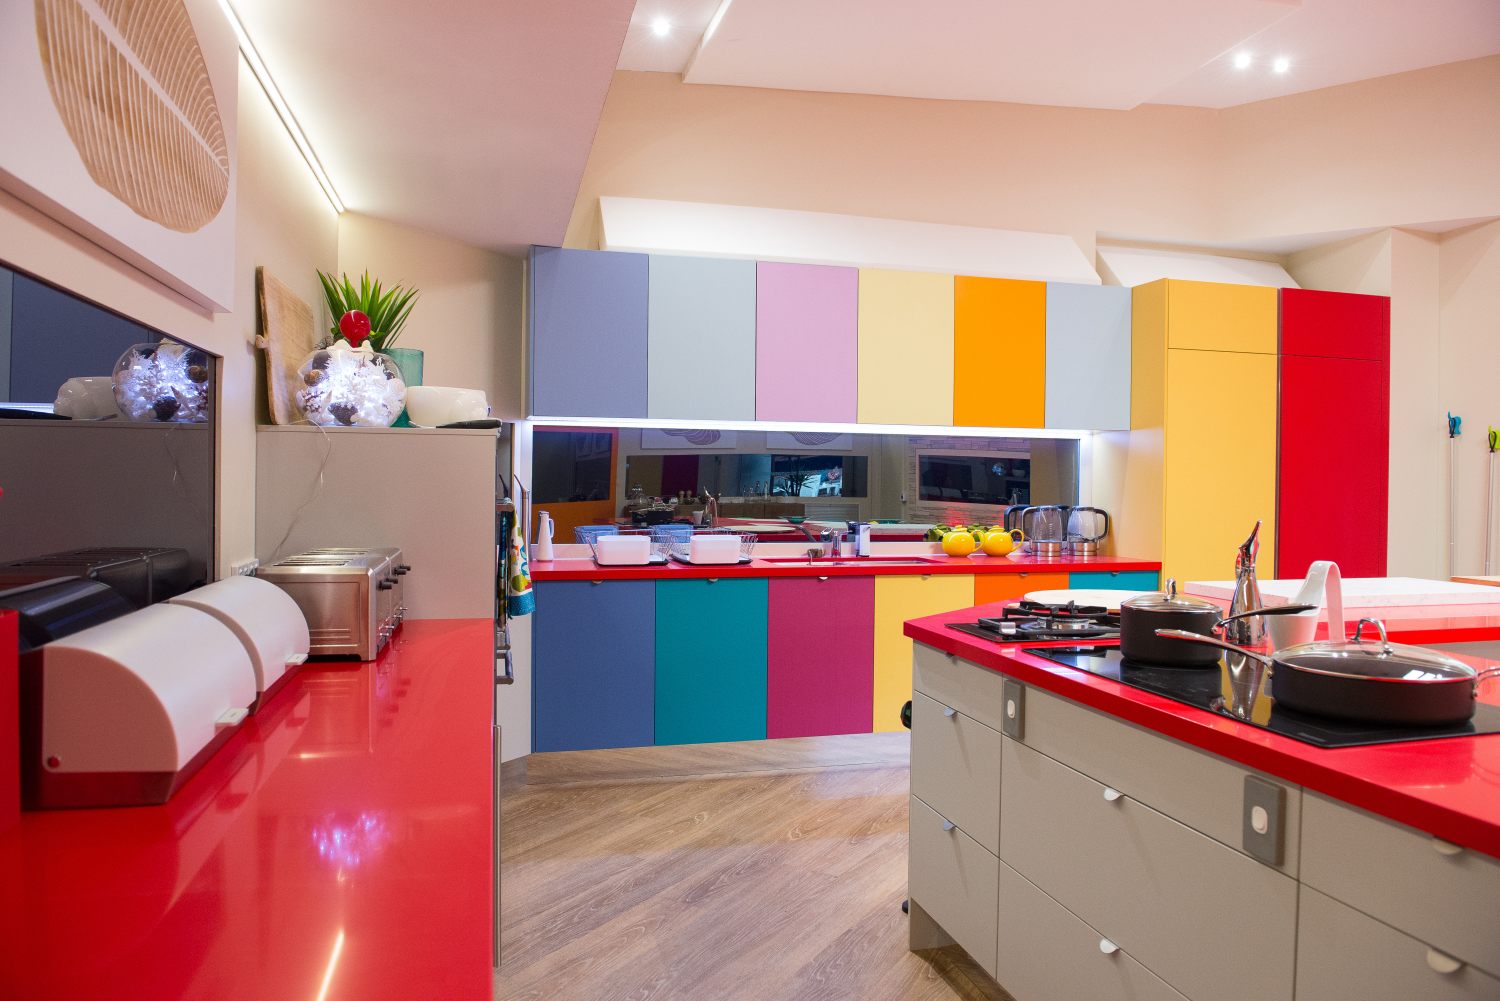 The Latest Colour Trends In Kitchen Design The Interiors Addict